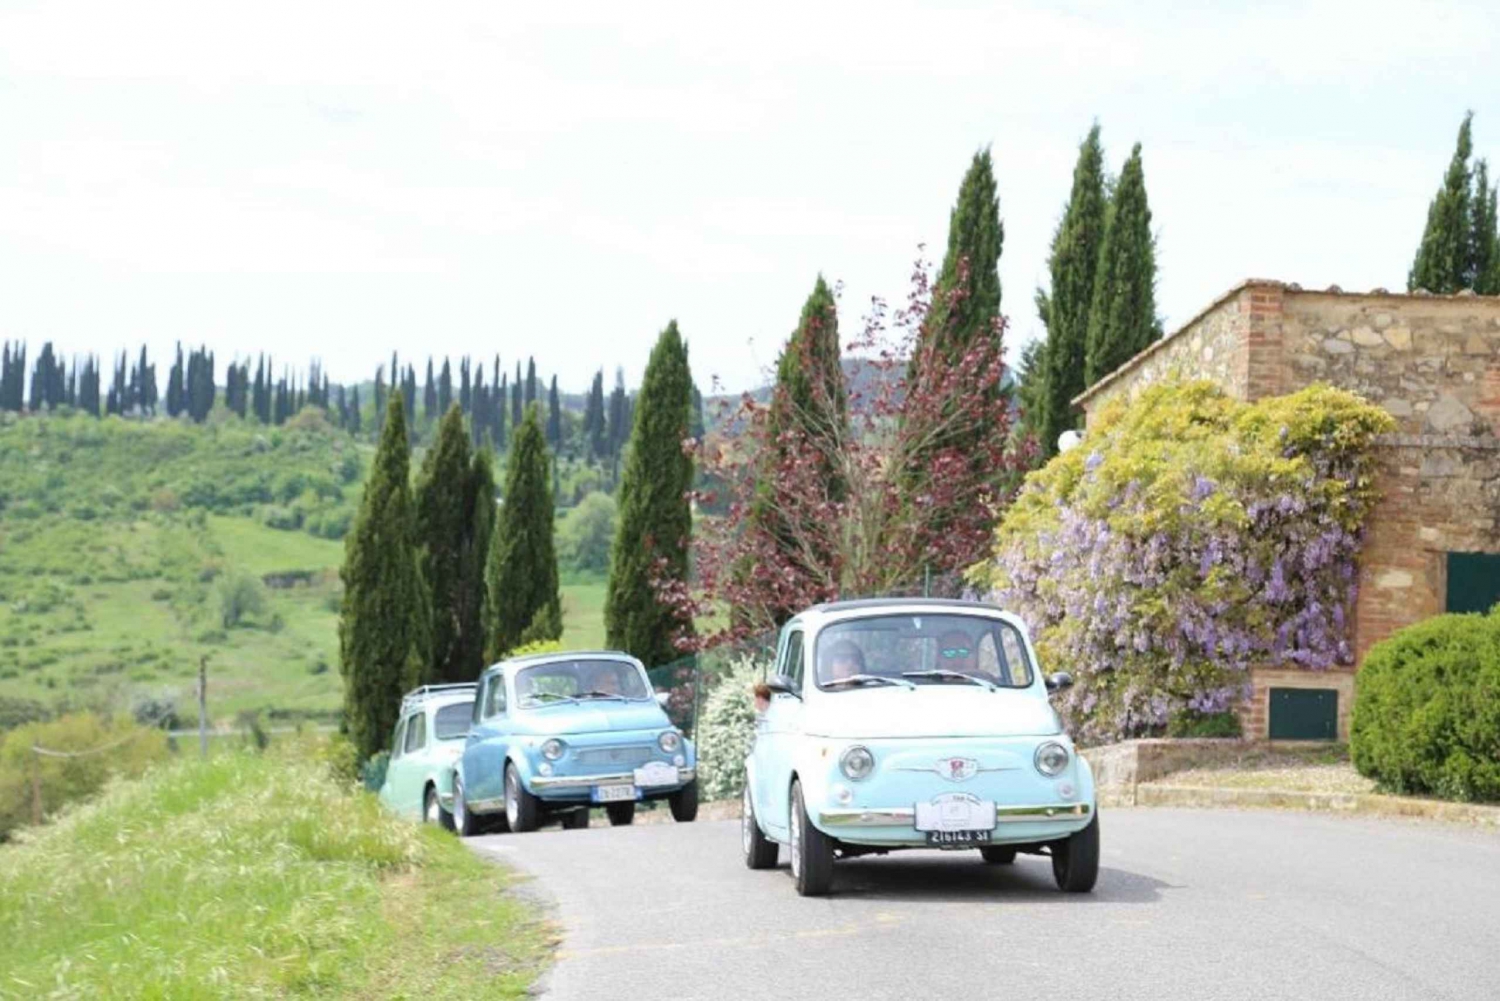 Dagvullende tour op het platteland van Chianti per oude Fiat 500